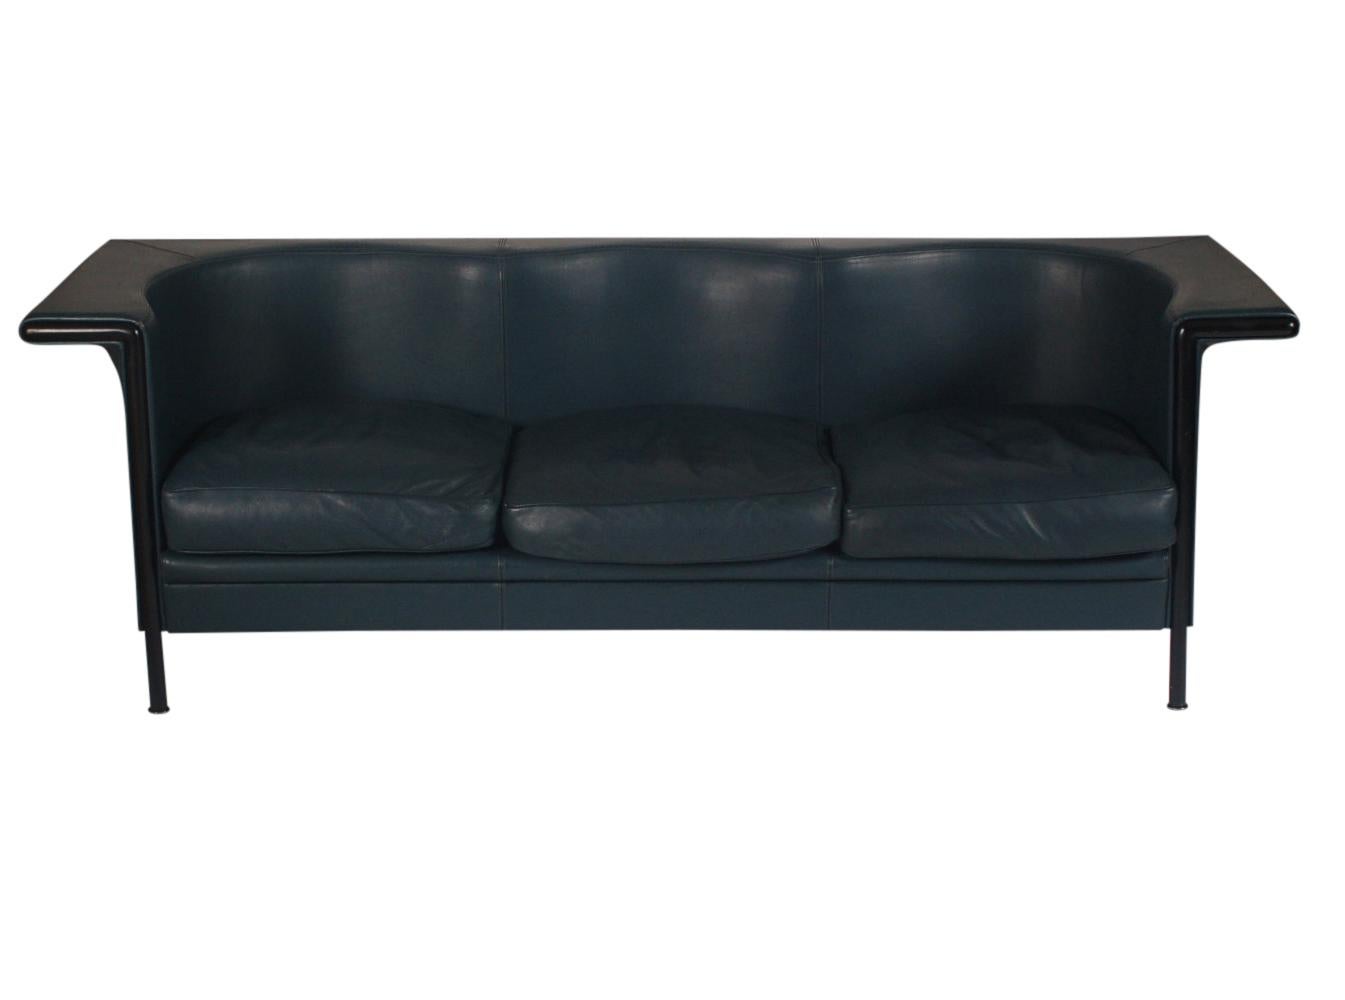 Steel Midcentury Italian Postmodern Leather Sofa by Antonio Citterio for Moroso